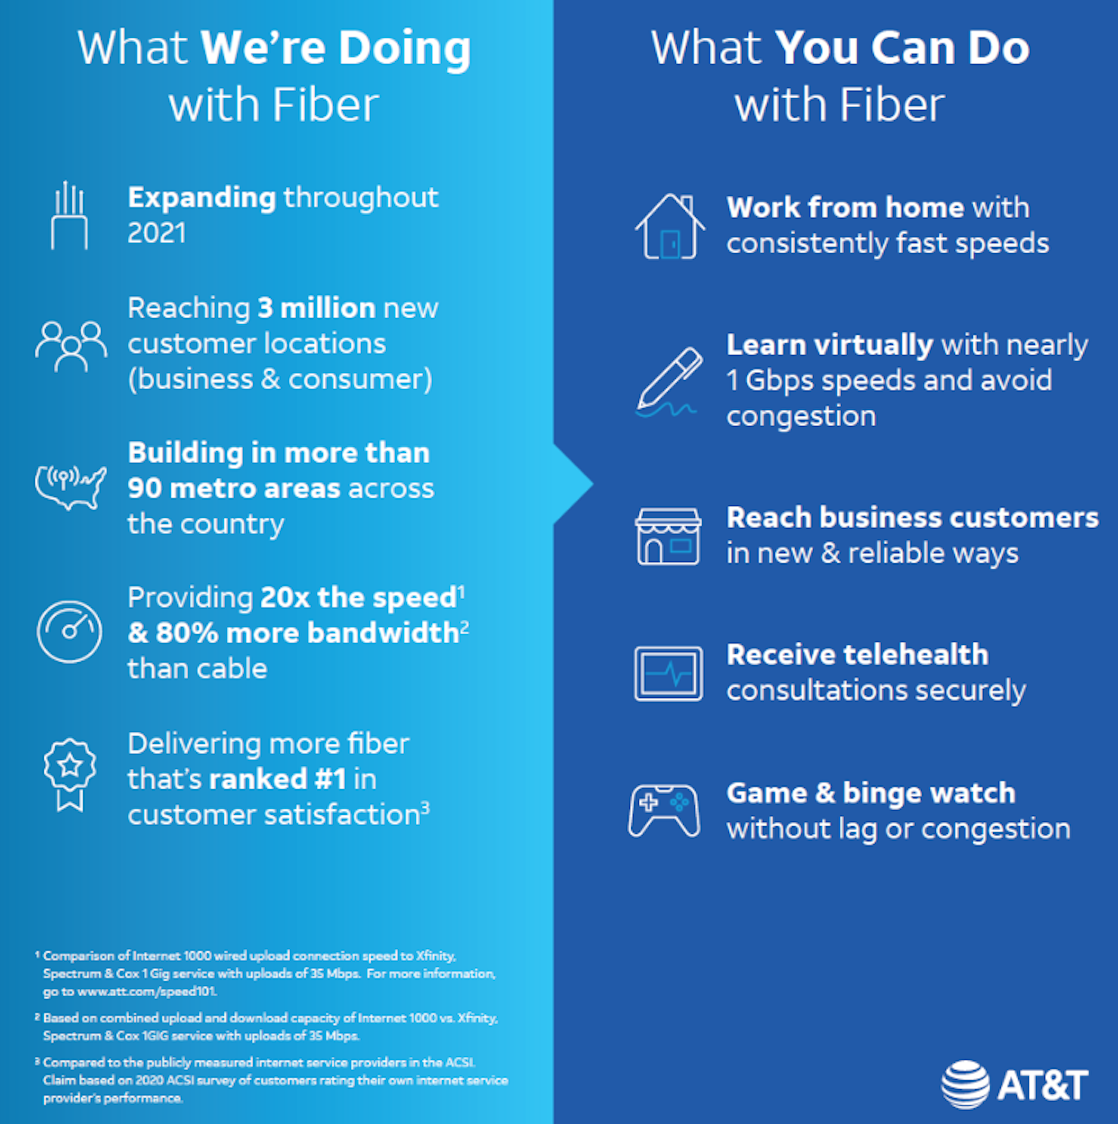 AT&T Fiber increases fiber broadband package speeds, plus internet